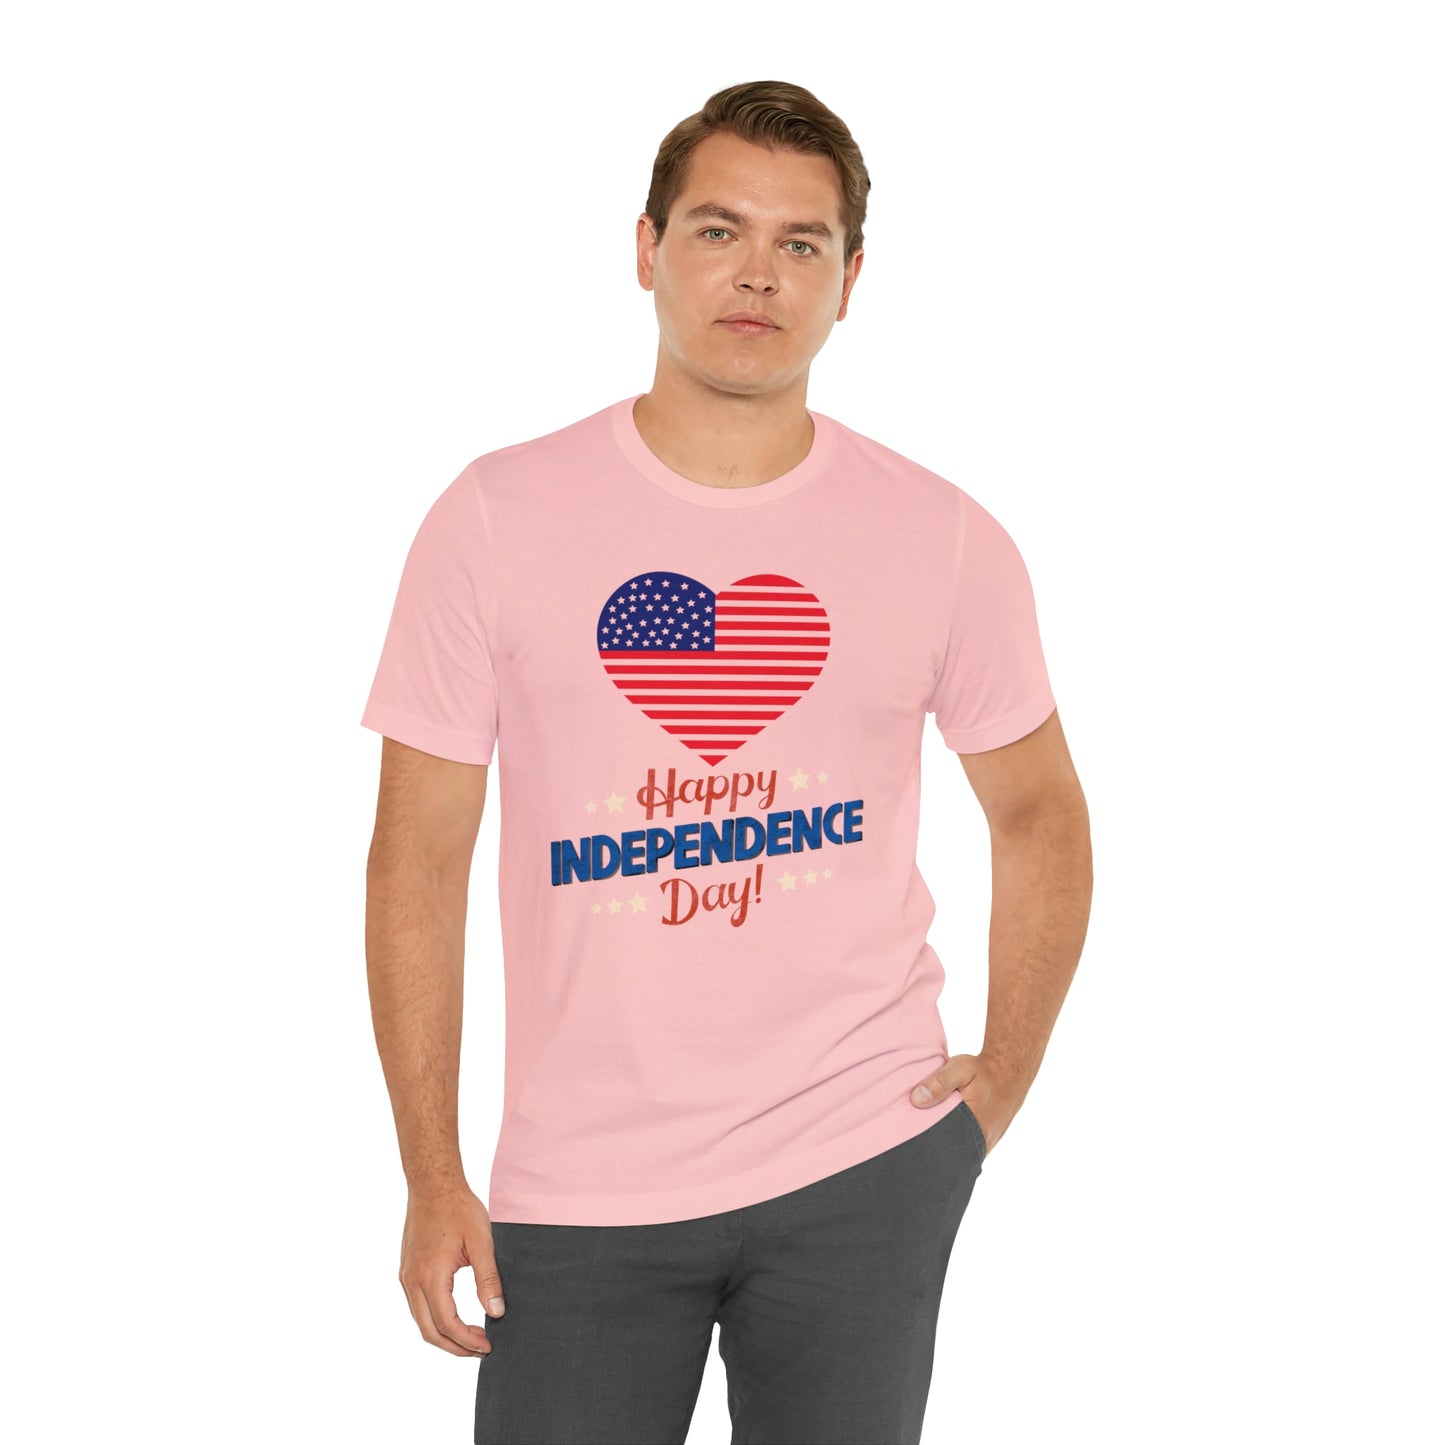 Happy Independence Day shirt, American flag shirt, Red, white, and blue shirt, Patriotic shirt, USA shirt